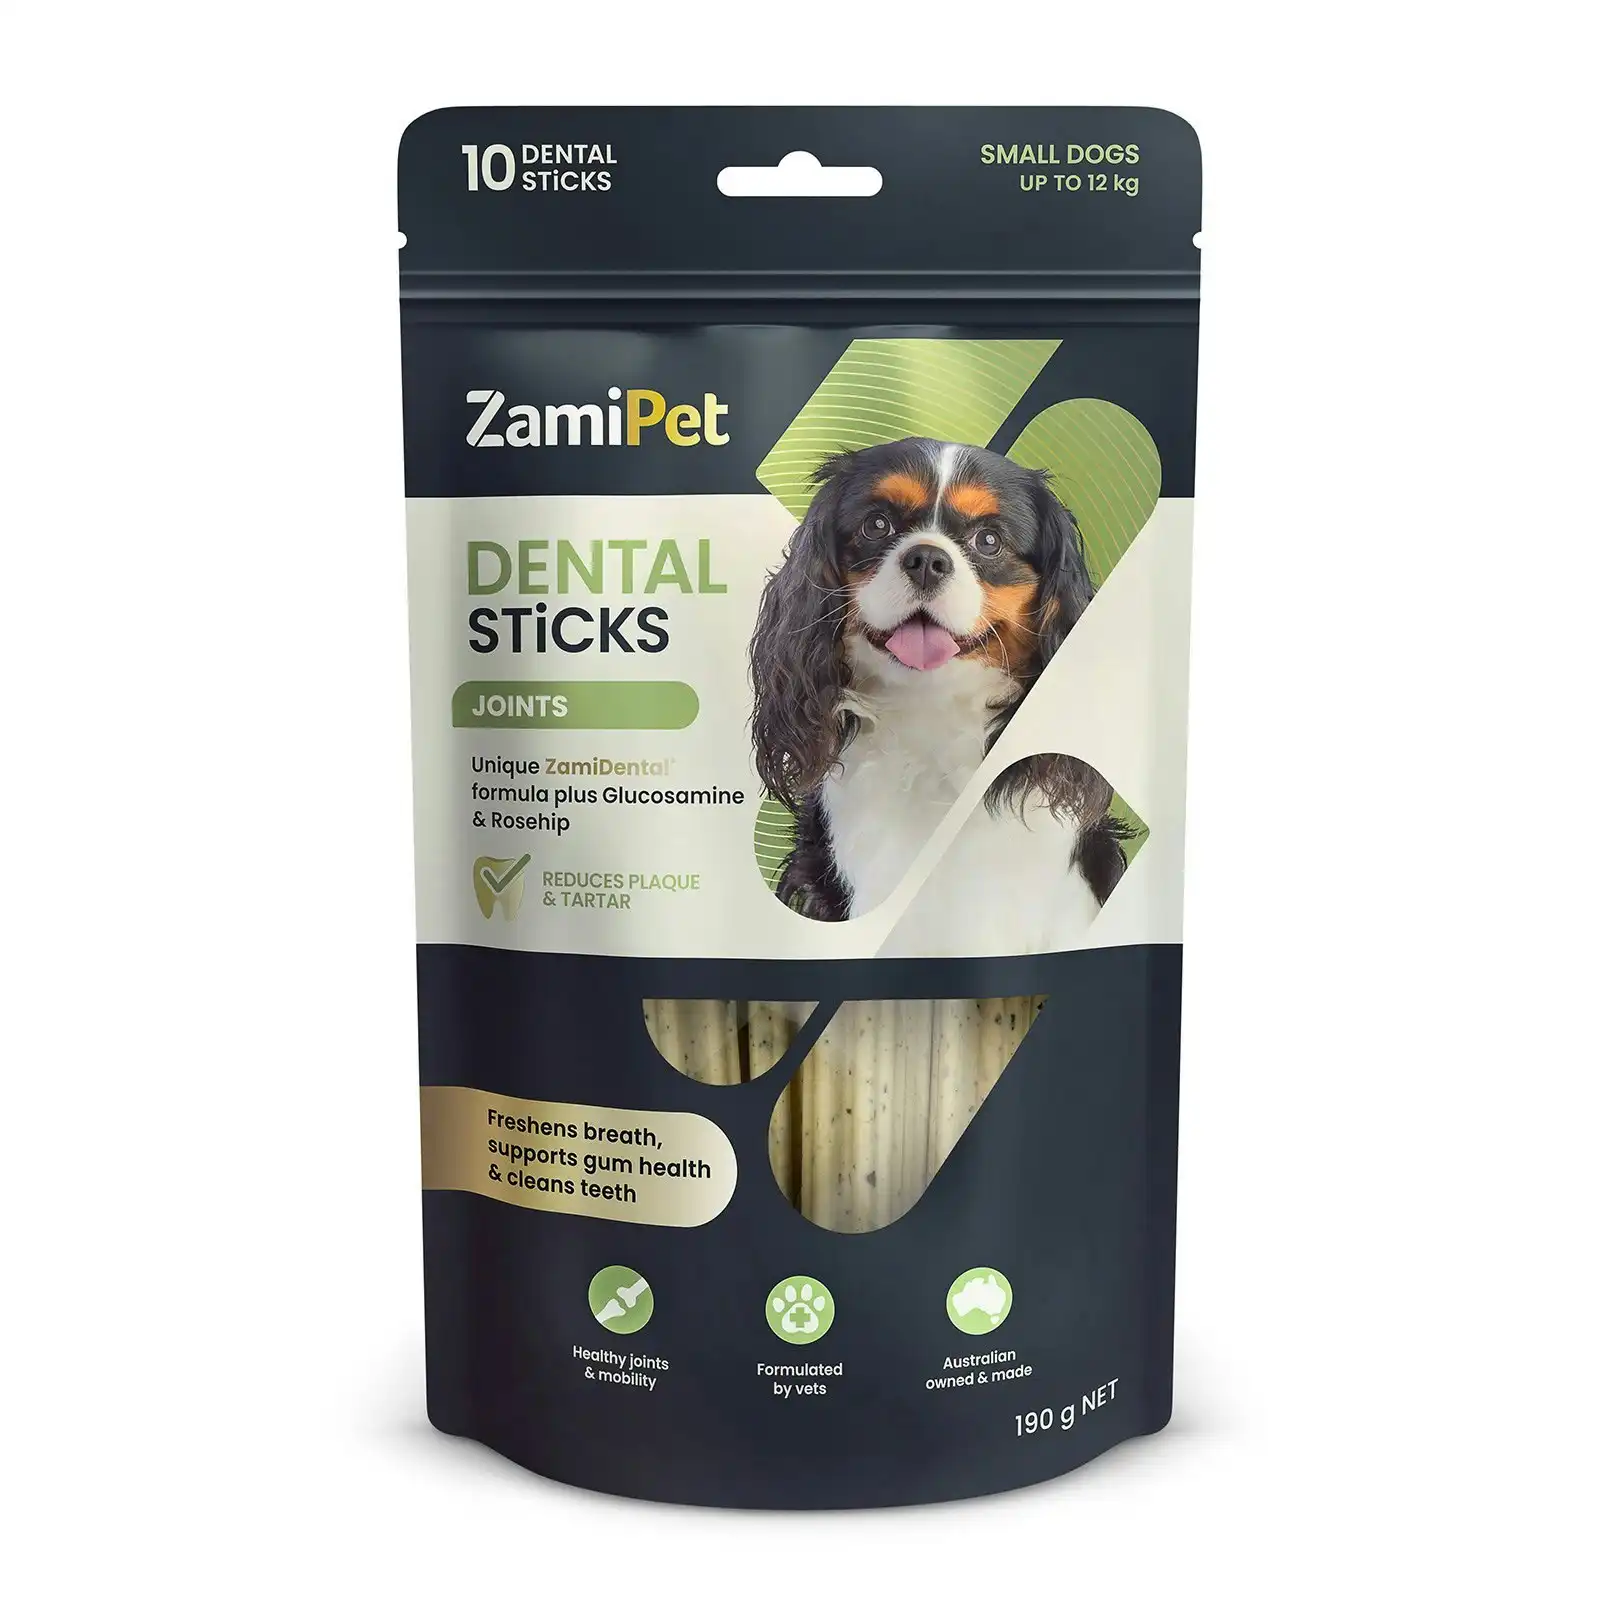 ZamiPet Dental Sticks Joint Treats For Small Dogs Upto 12 Kg 10 Sticks 190 GM